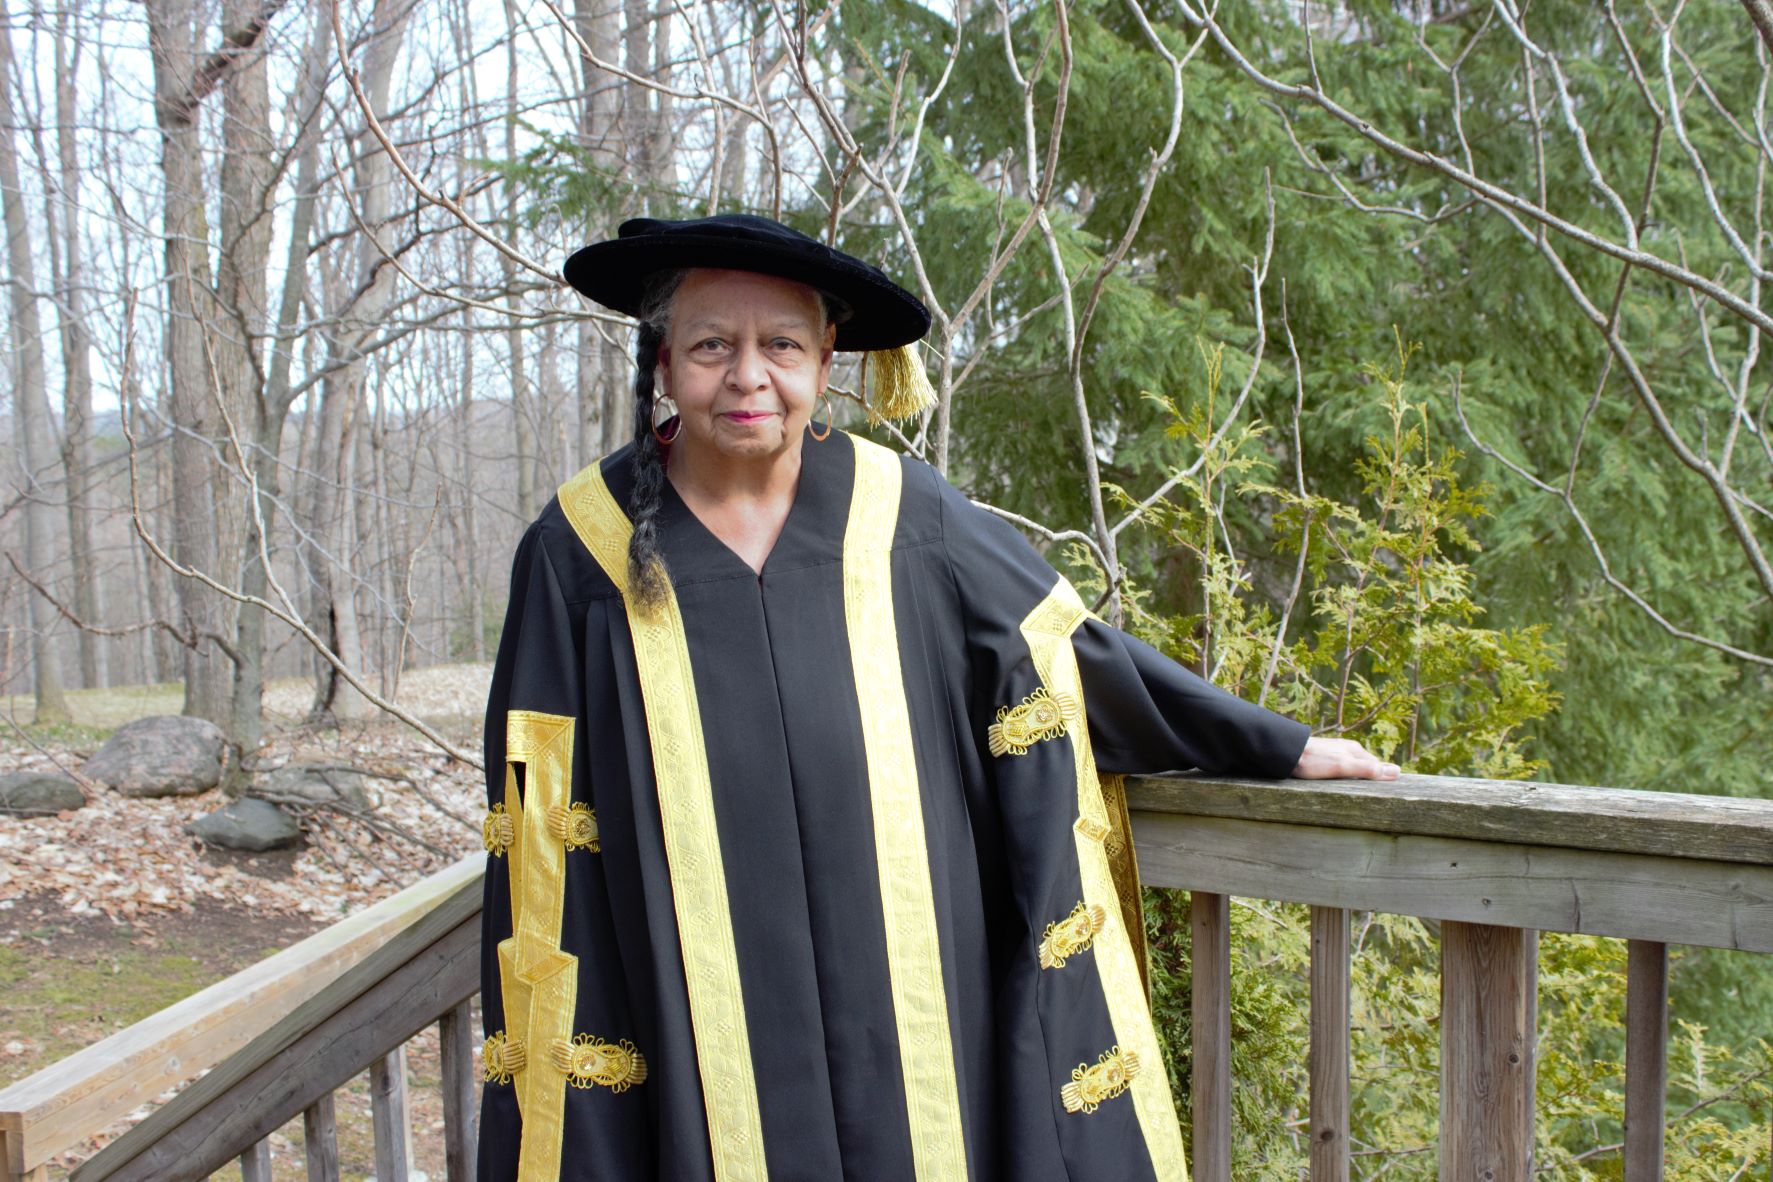 Lakehead Chancellor Rita Shelton Deverell wearing ceremonial robes on a deck outdoors